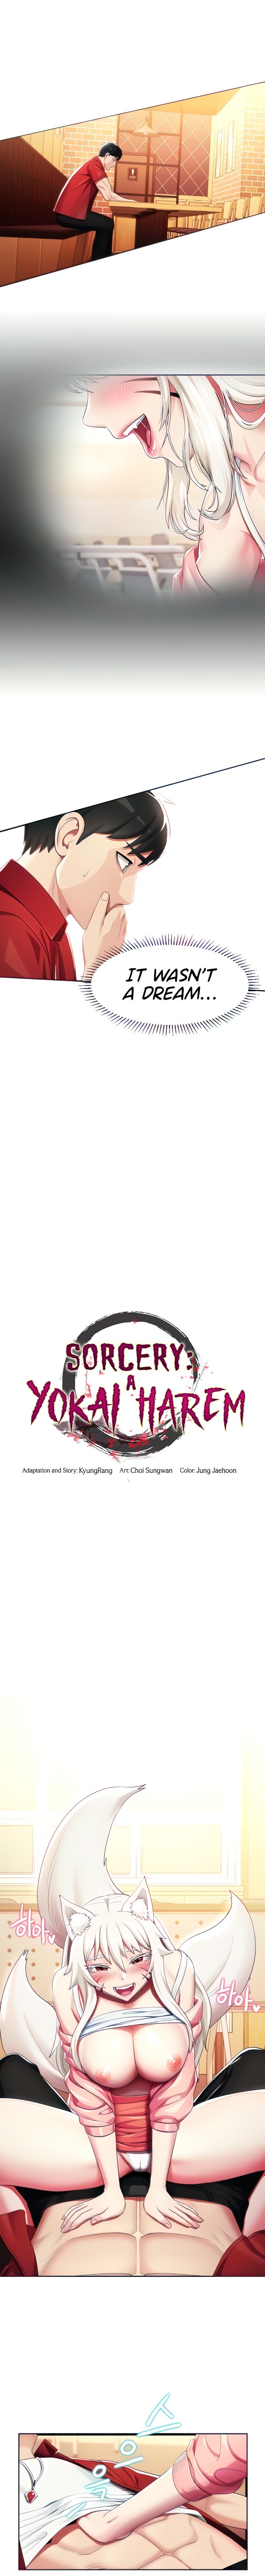 Sorcery Tales: Yokai Harem - Chapter 5 Page 2